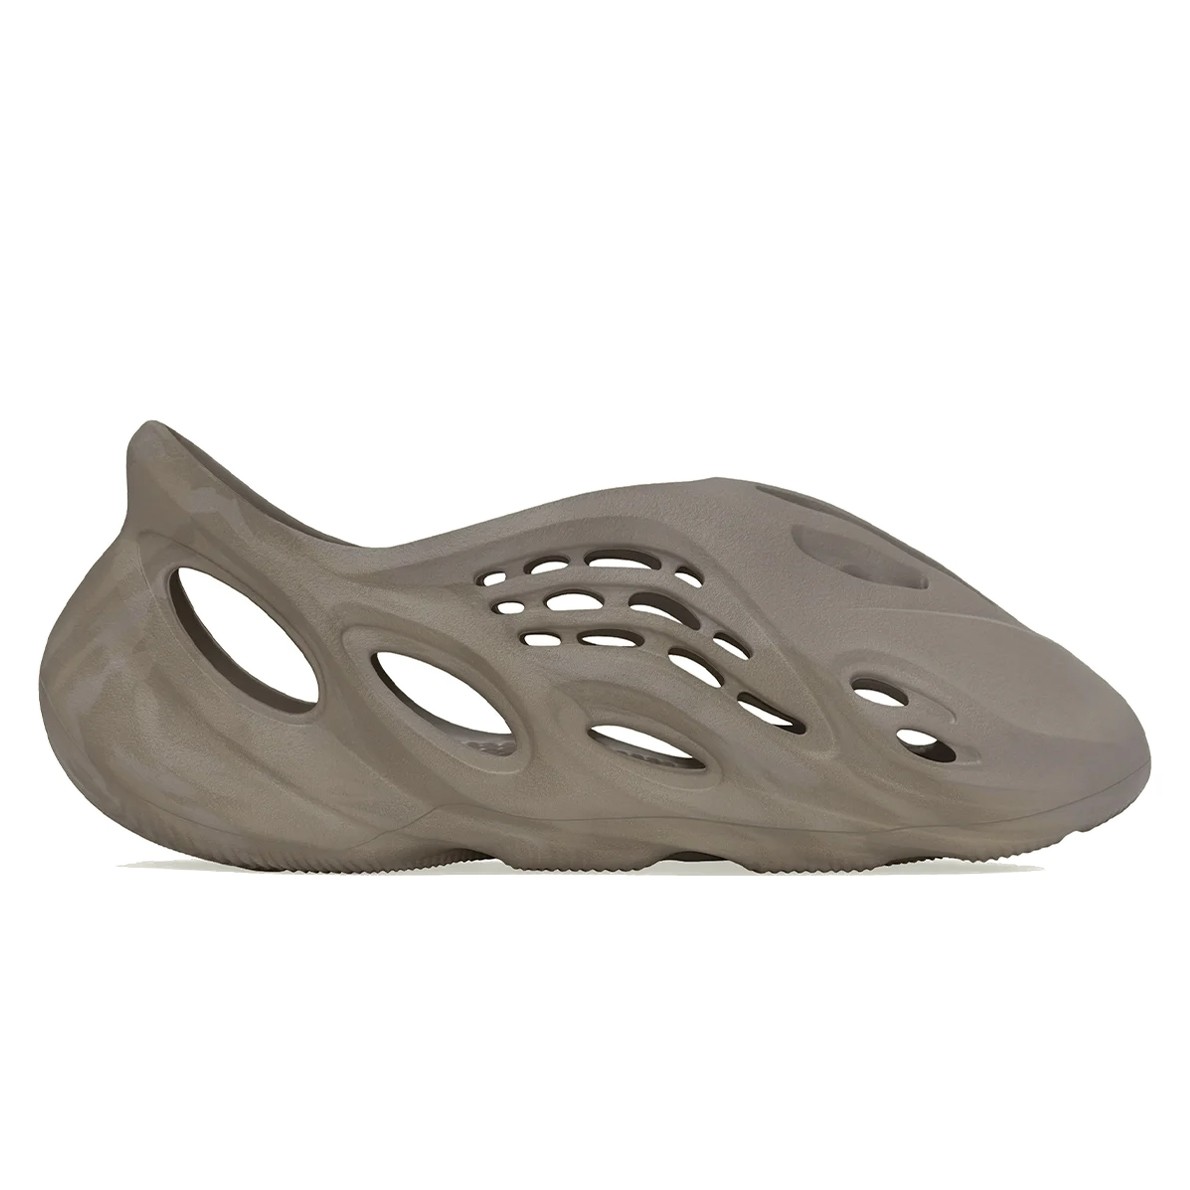 adidas YEEZY Foam Runner 'Stone Sage' - GX4472 - Consortium